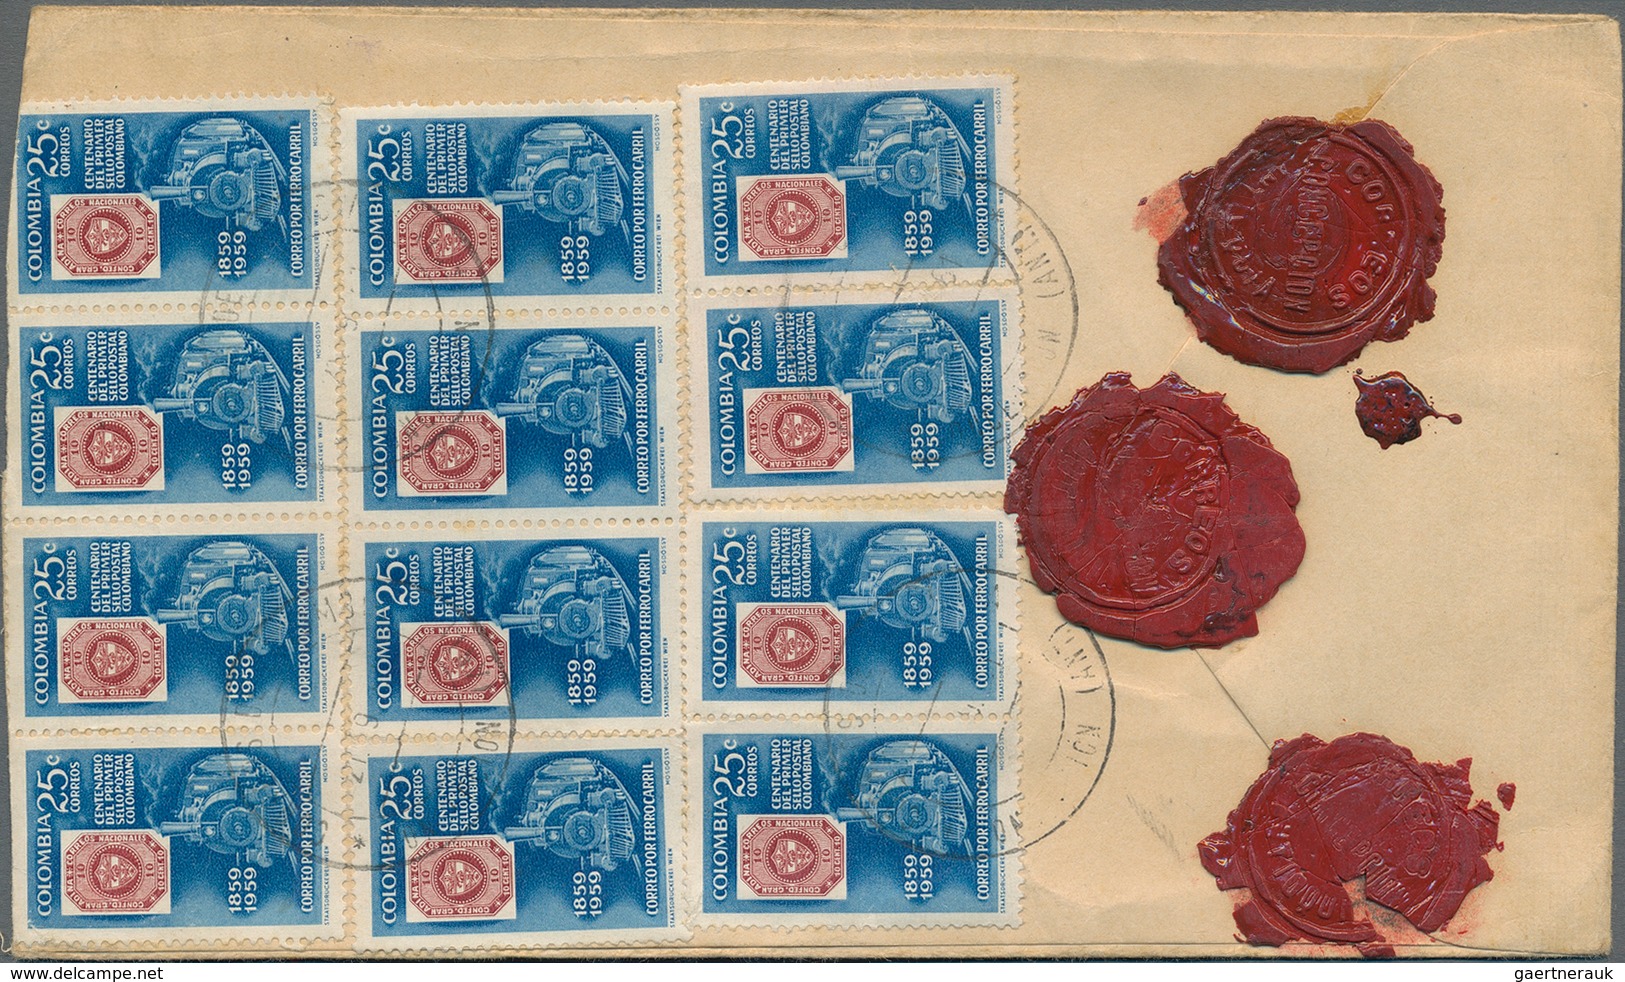 Kolumbien - Ganzsachen: 1961 Postal Stationery Registered Envelope 10+20c. (two Stamps) Used From Co - Kolumbien